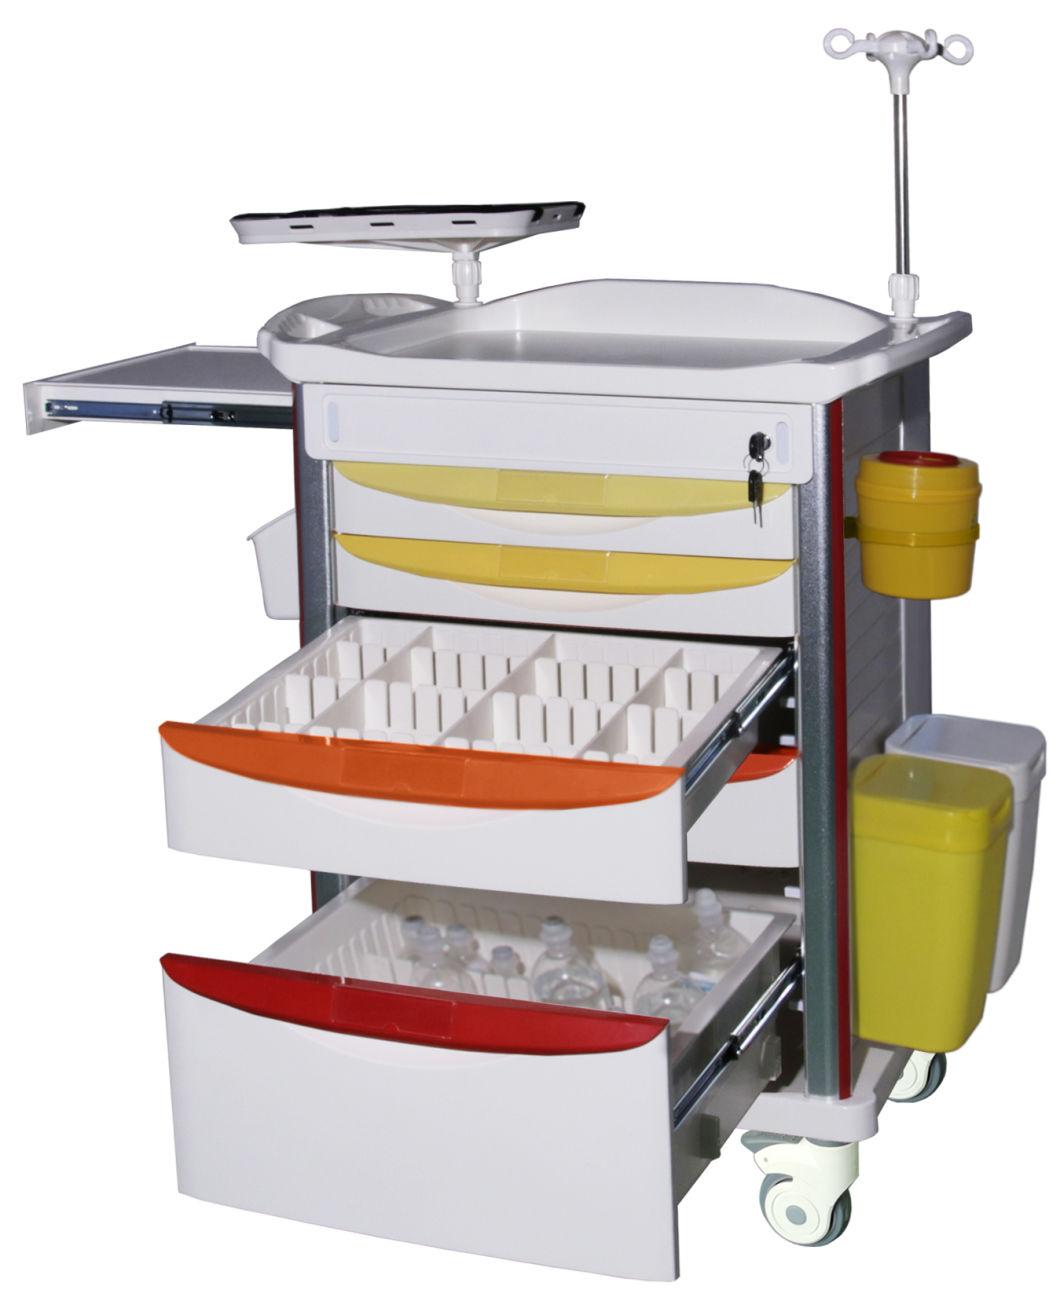 Mn-Ec005 Hospital Furniture ABS Plastic Anesthesia Medicine Medical Cart Emergency Treatment Trolley